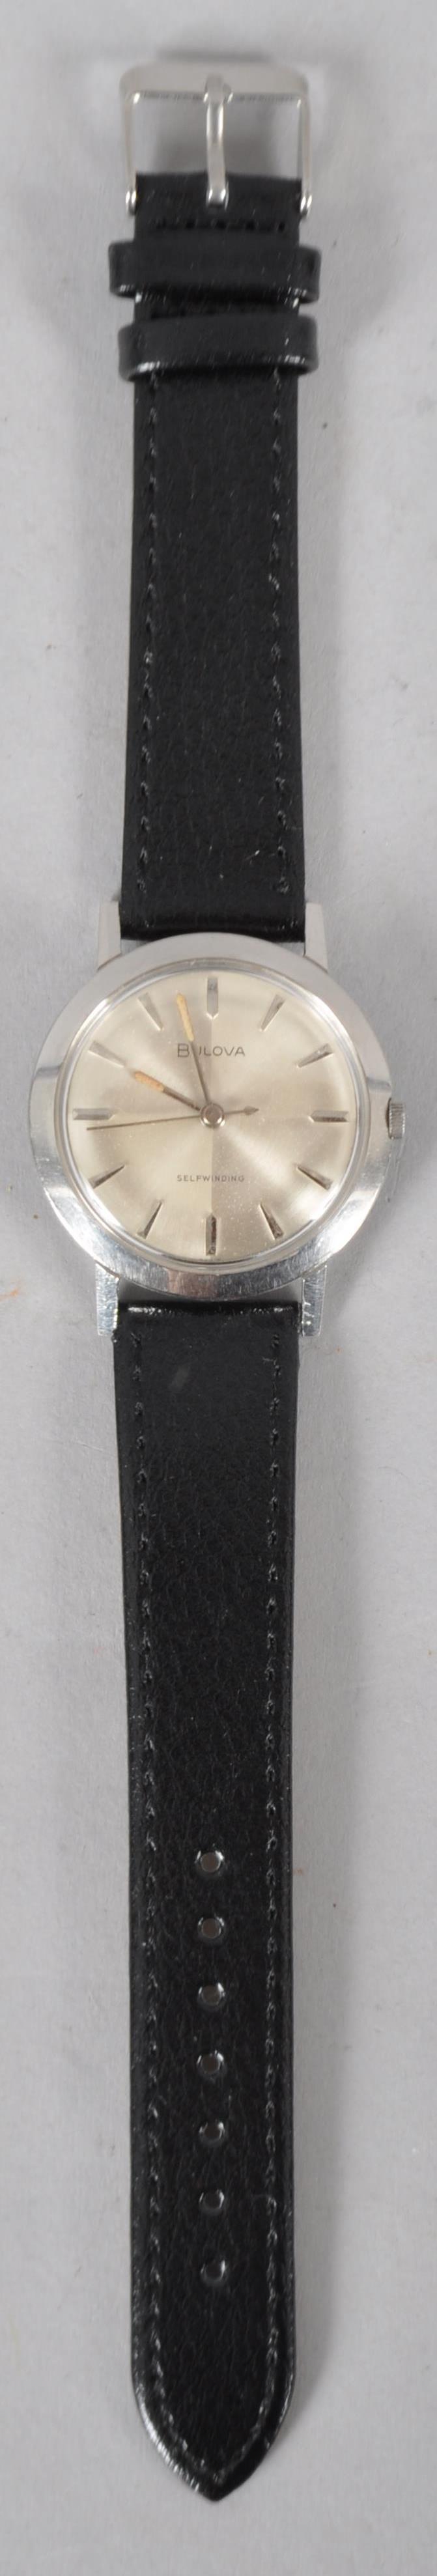 A stainless steel self winding Bulova wristwatch.